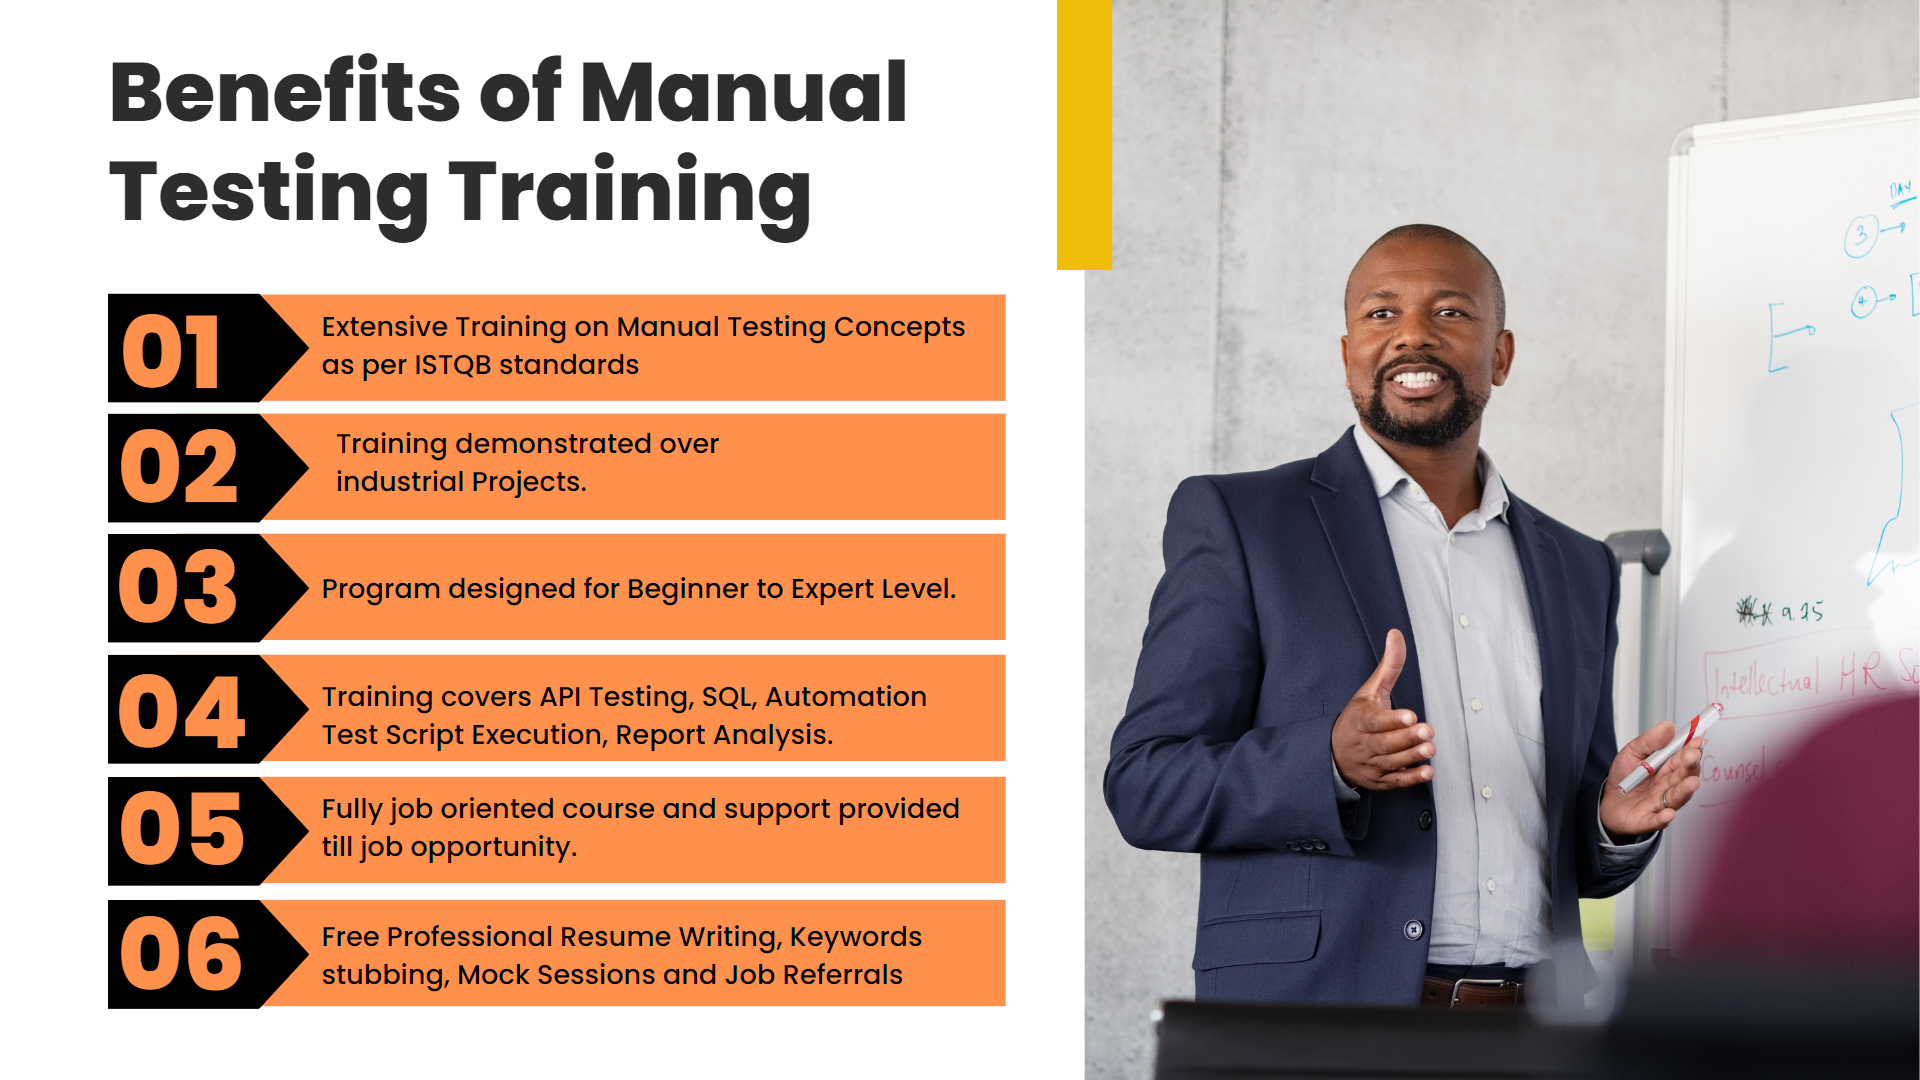 Benefits of Manual Testing Training